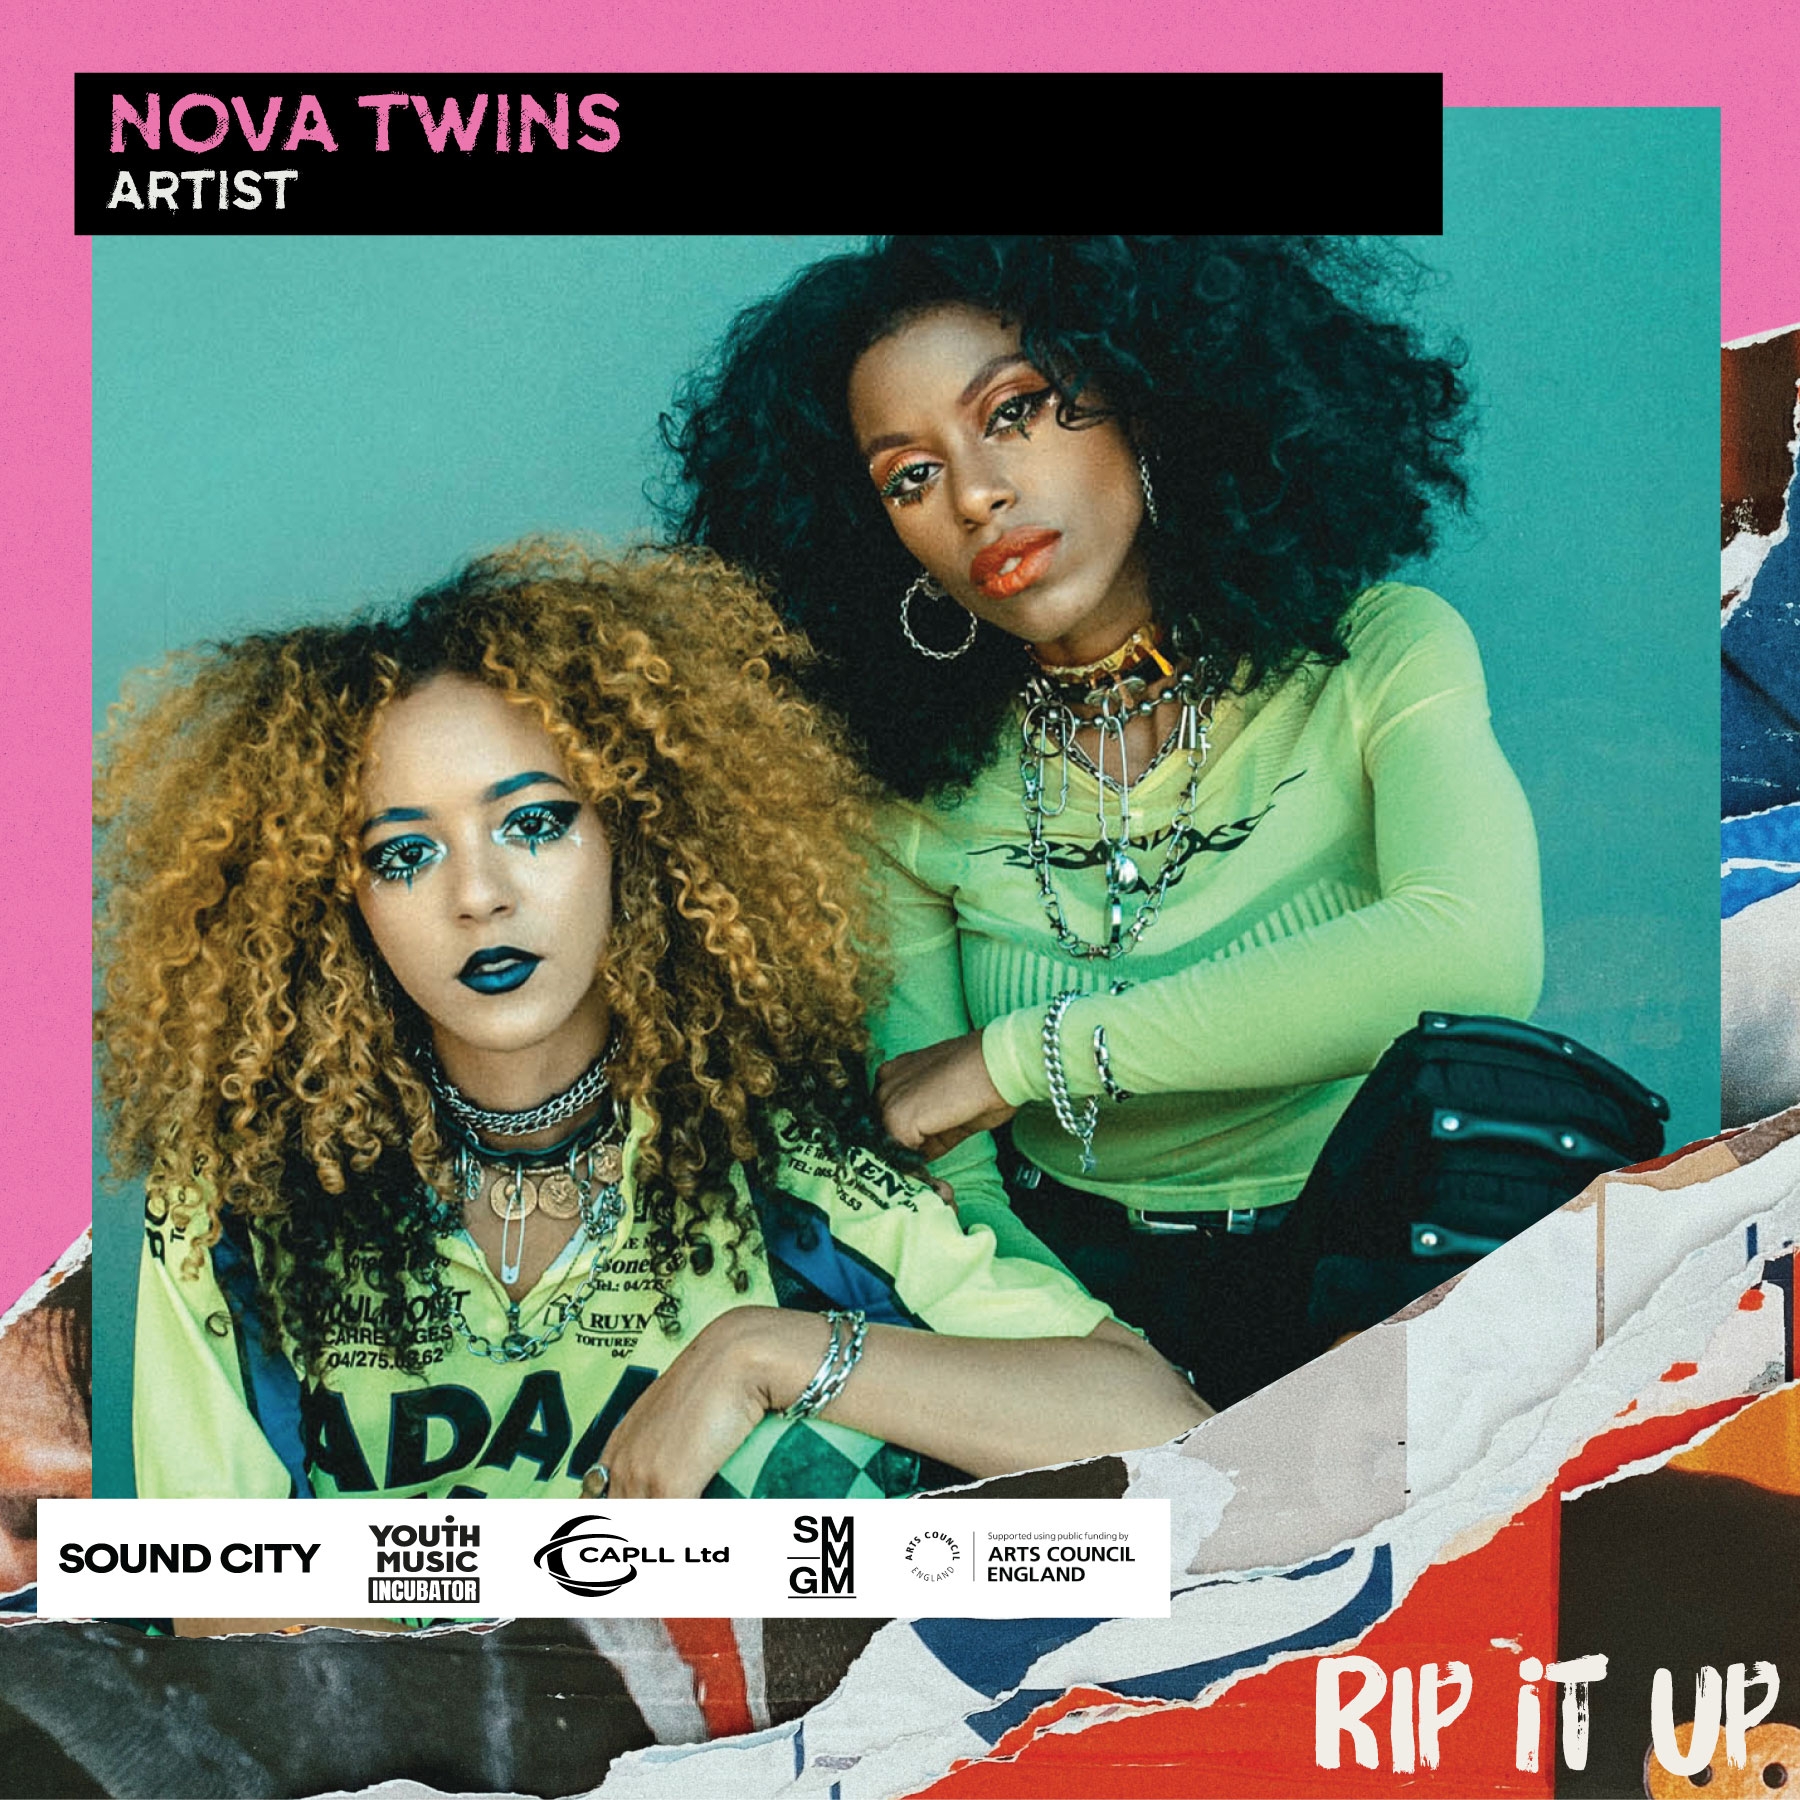 Discover Rip It Up's Nova Twins